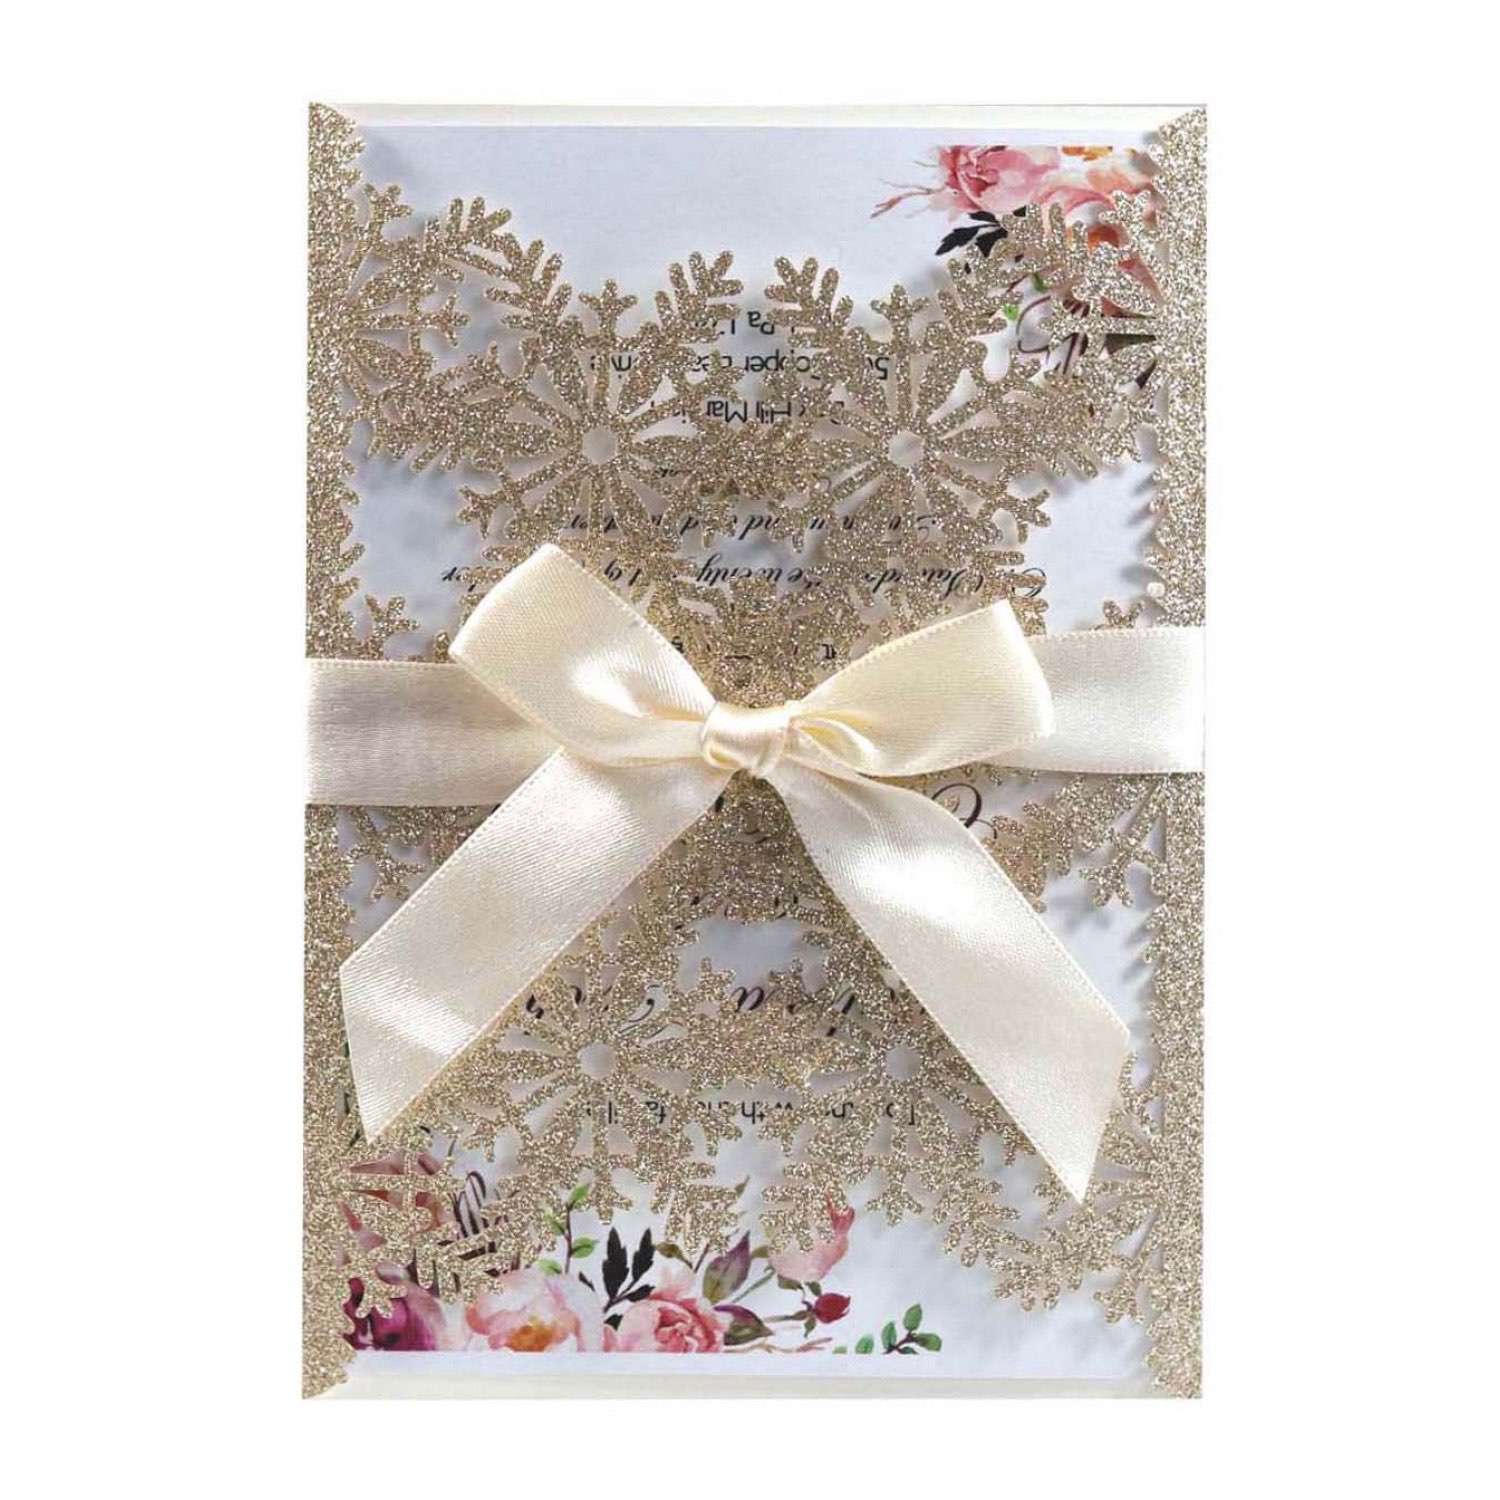 Christmas Greeting Card Snowflake Card Wedding Card Design Laser Cut